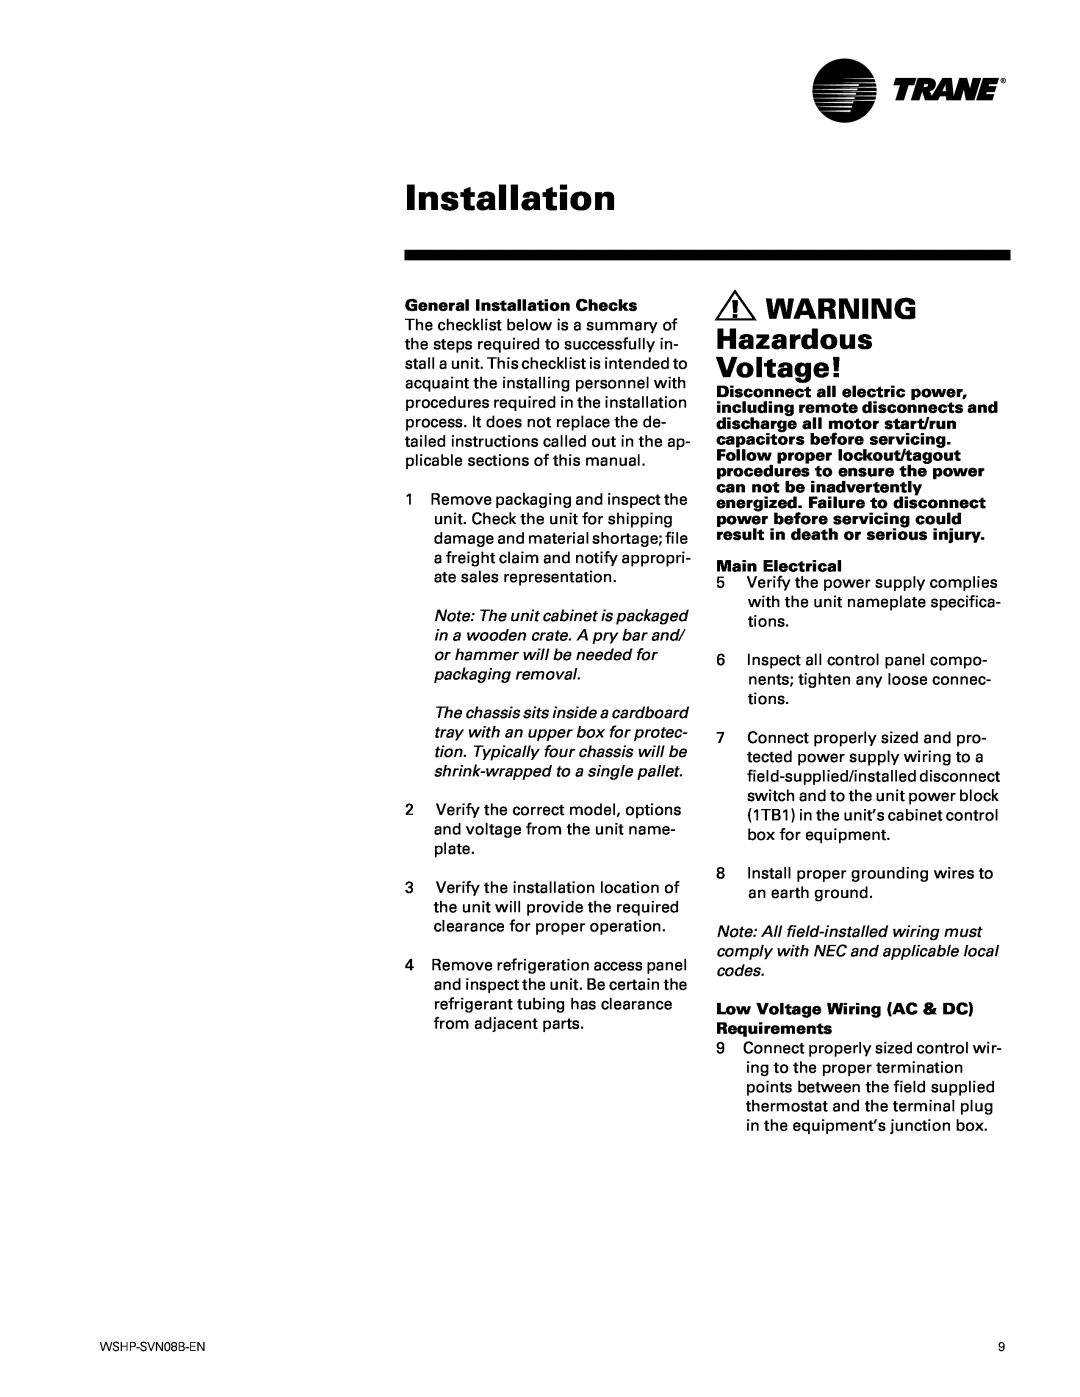 Trane GETB manual WARNING Hazardous Voltage, General Installation Checks, Main Electrical 